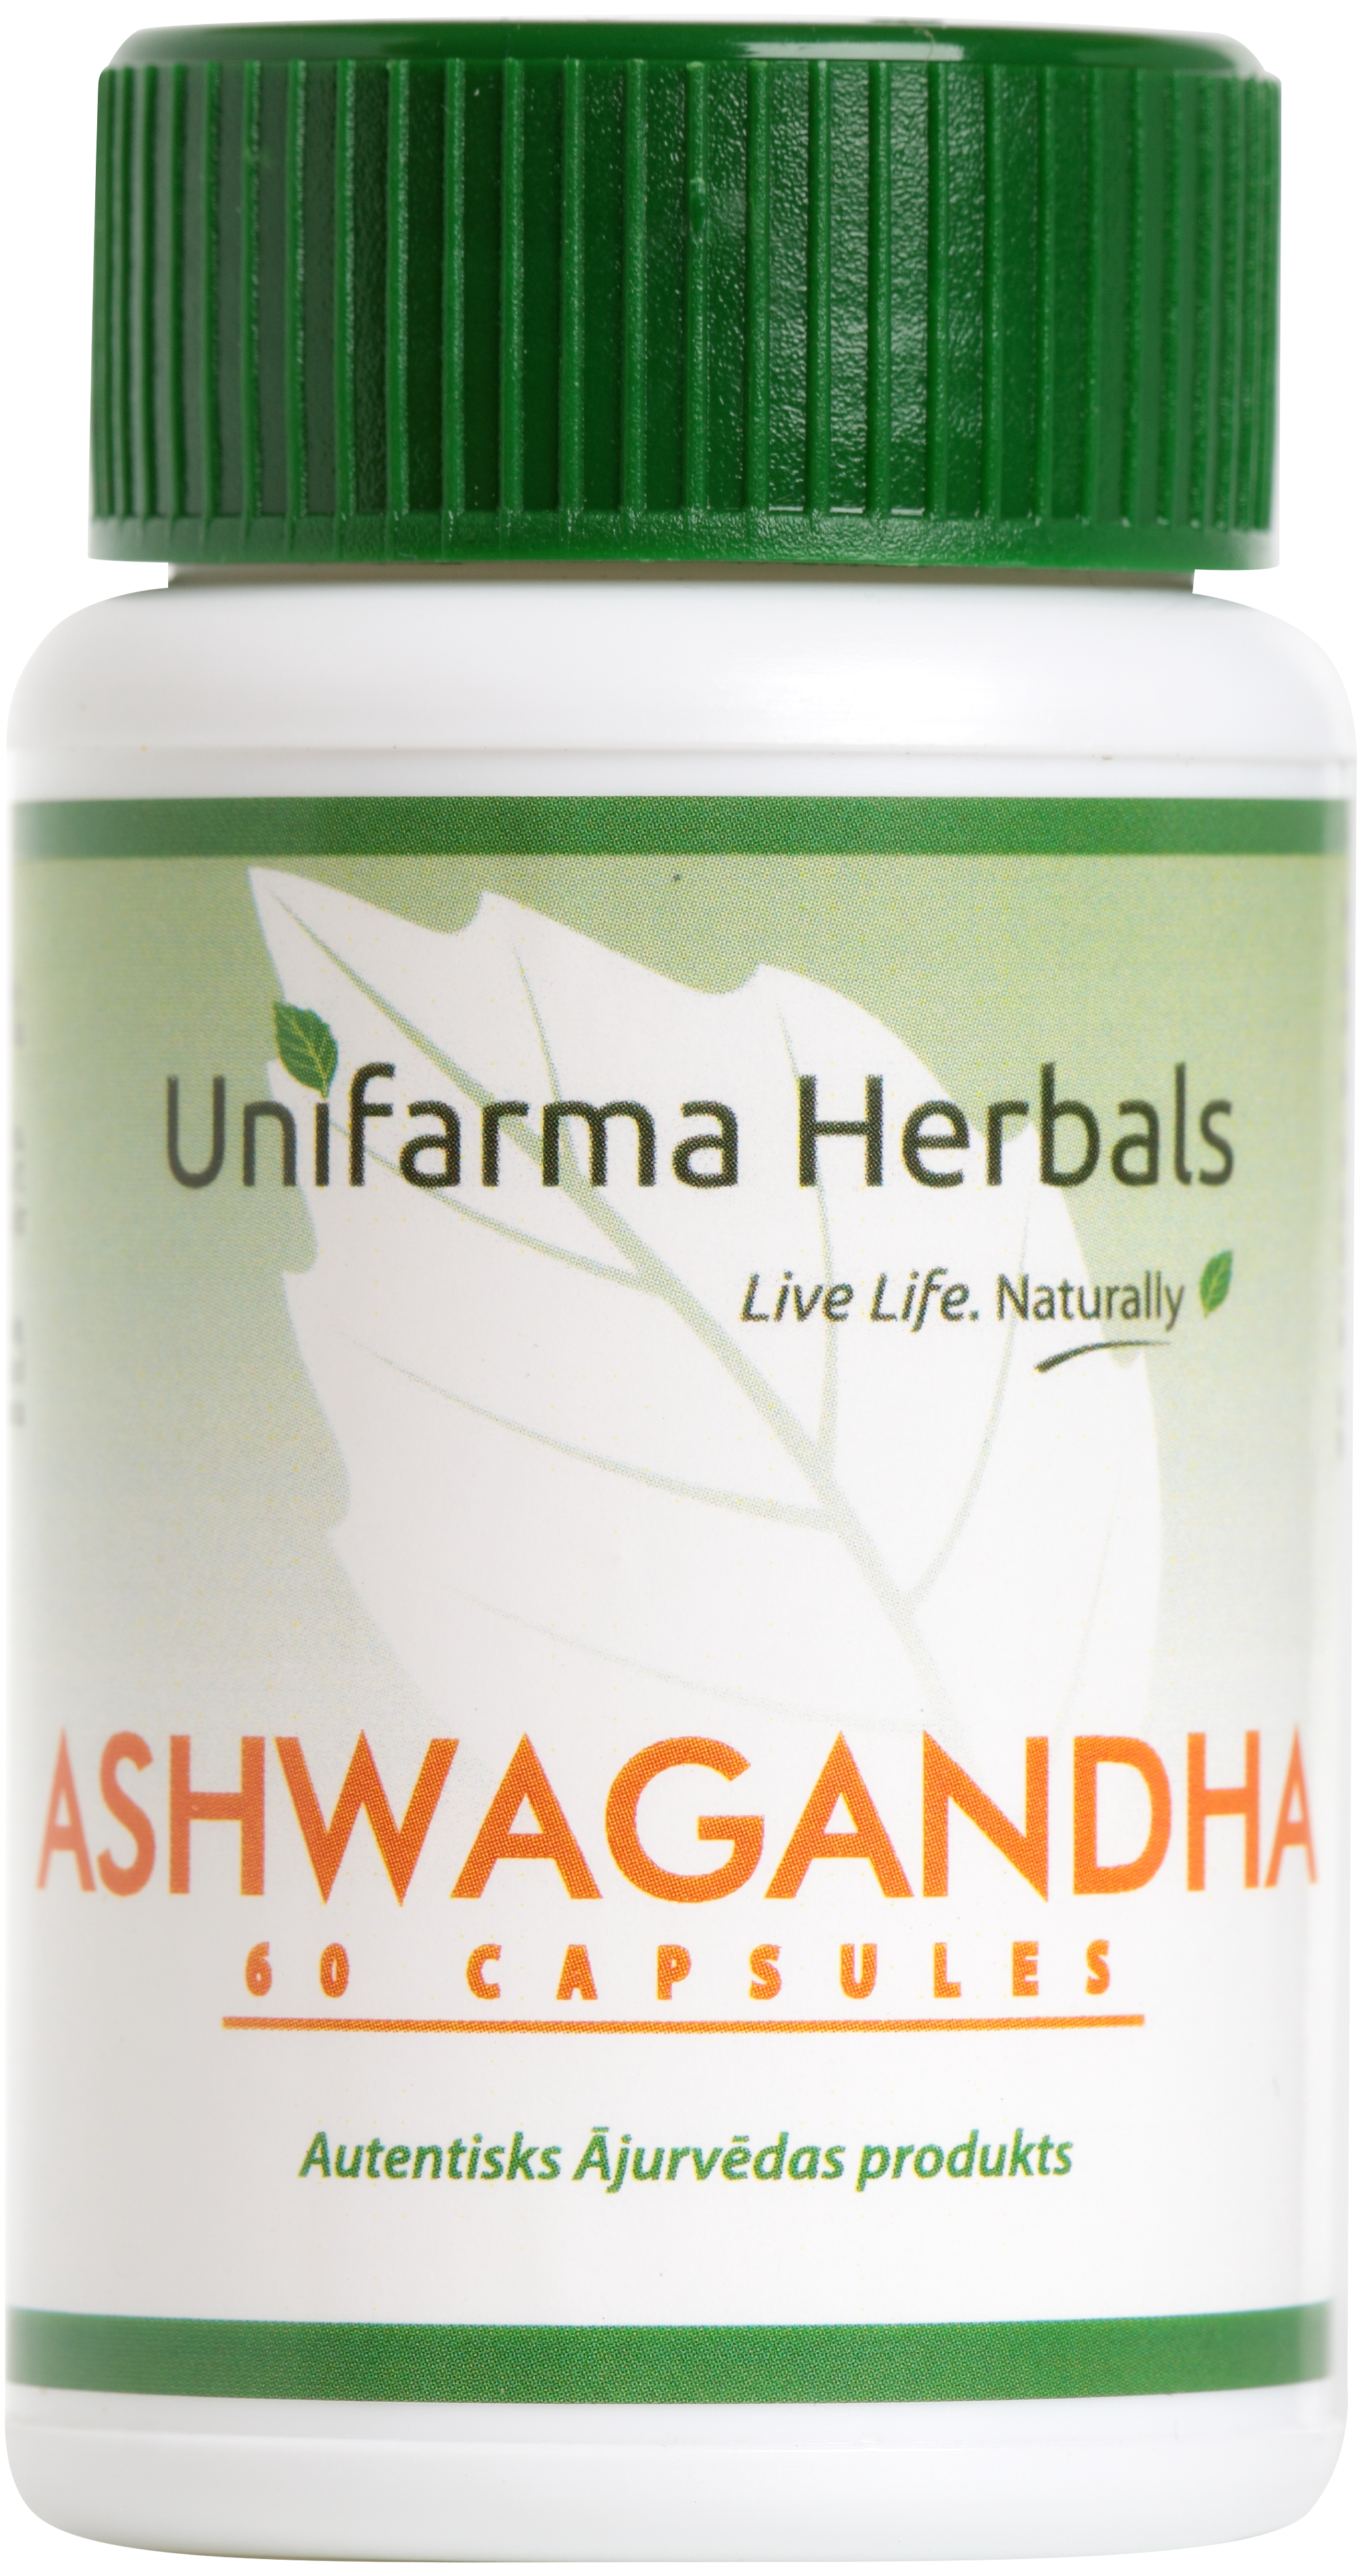 Unifarma Herbals Ashwagandha